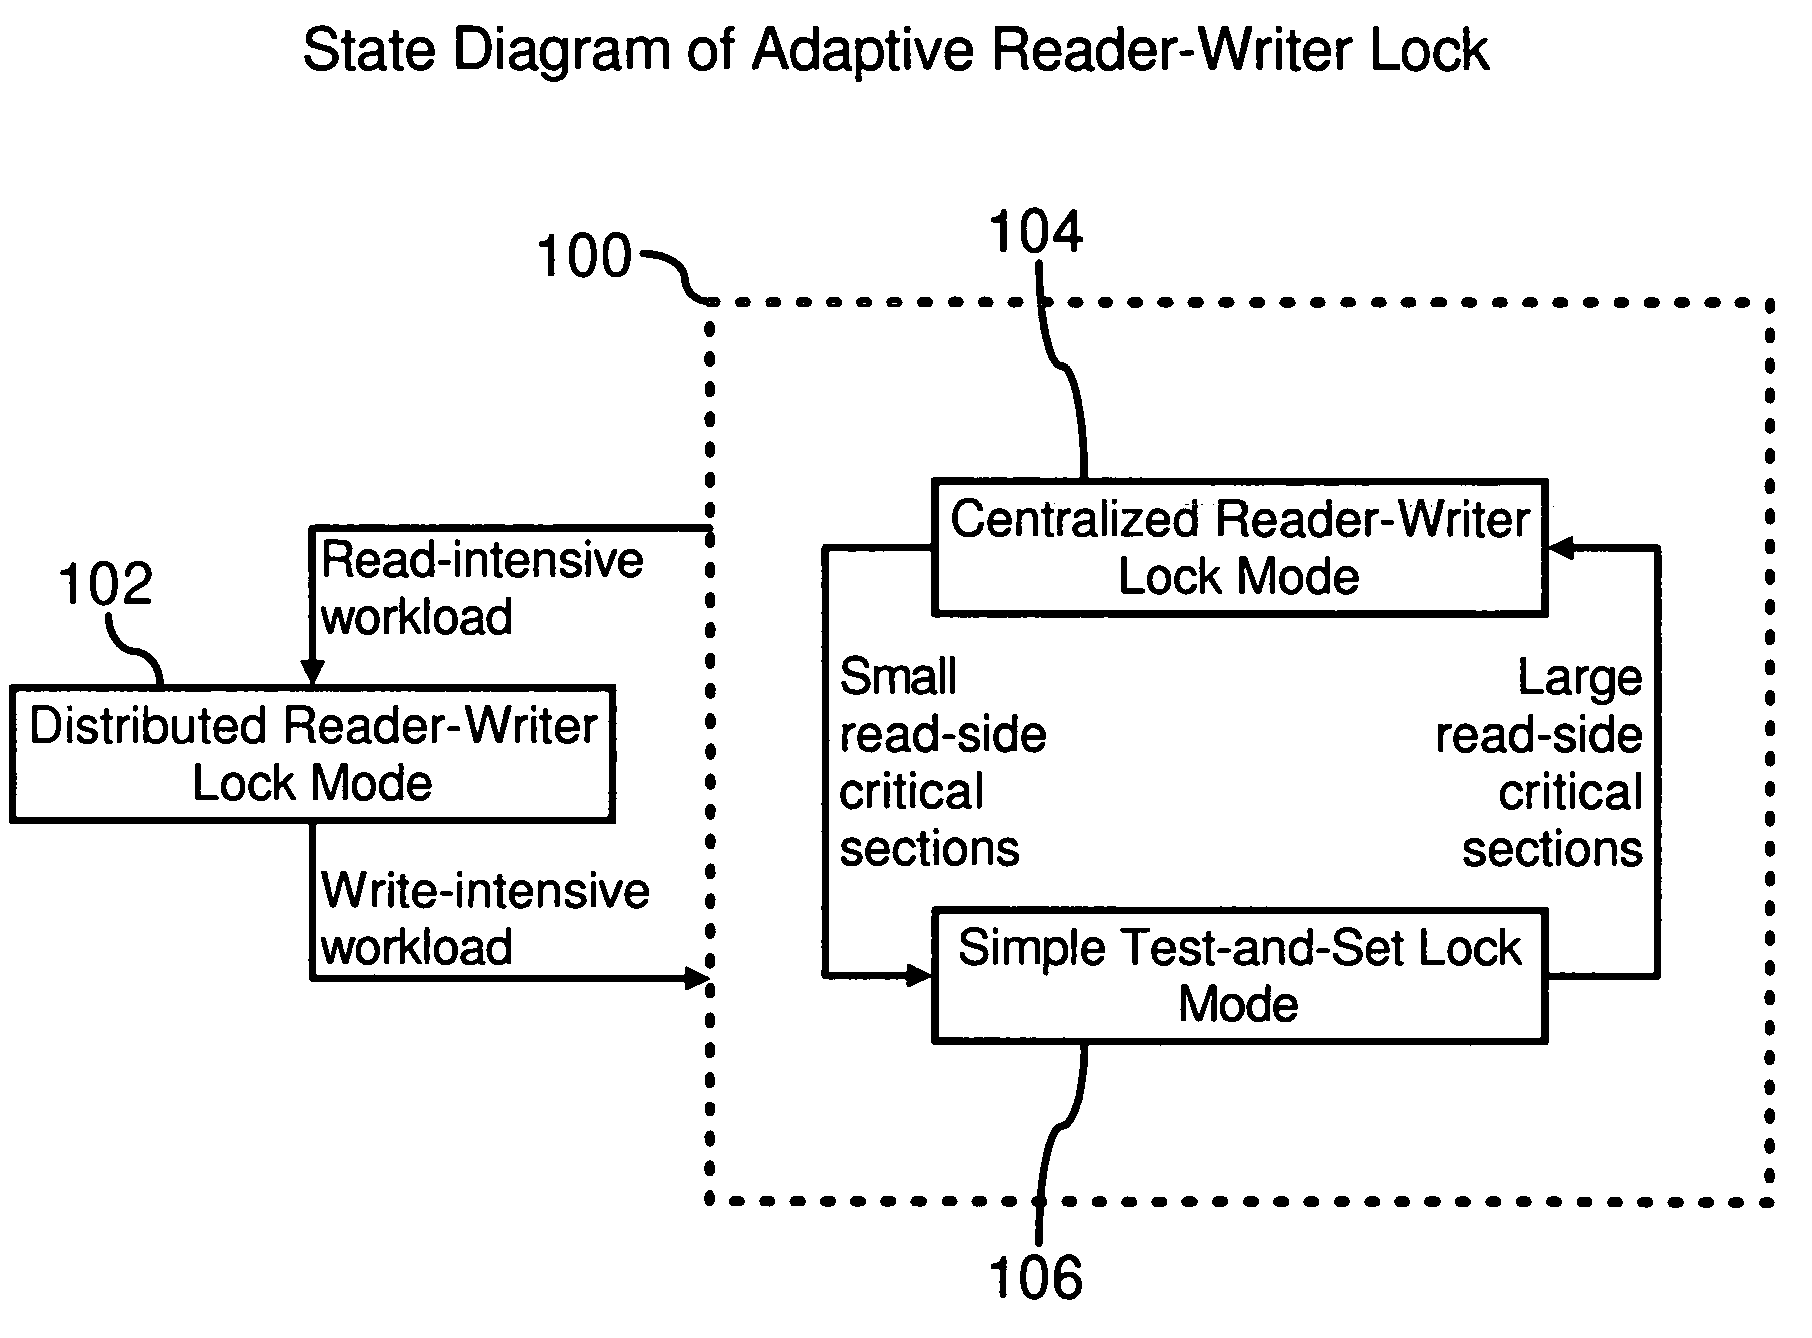 Adaptive reader-writer lock